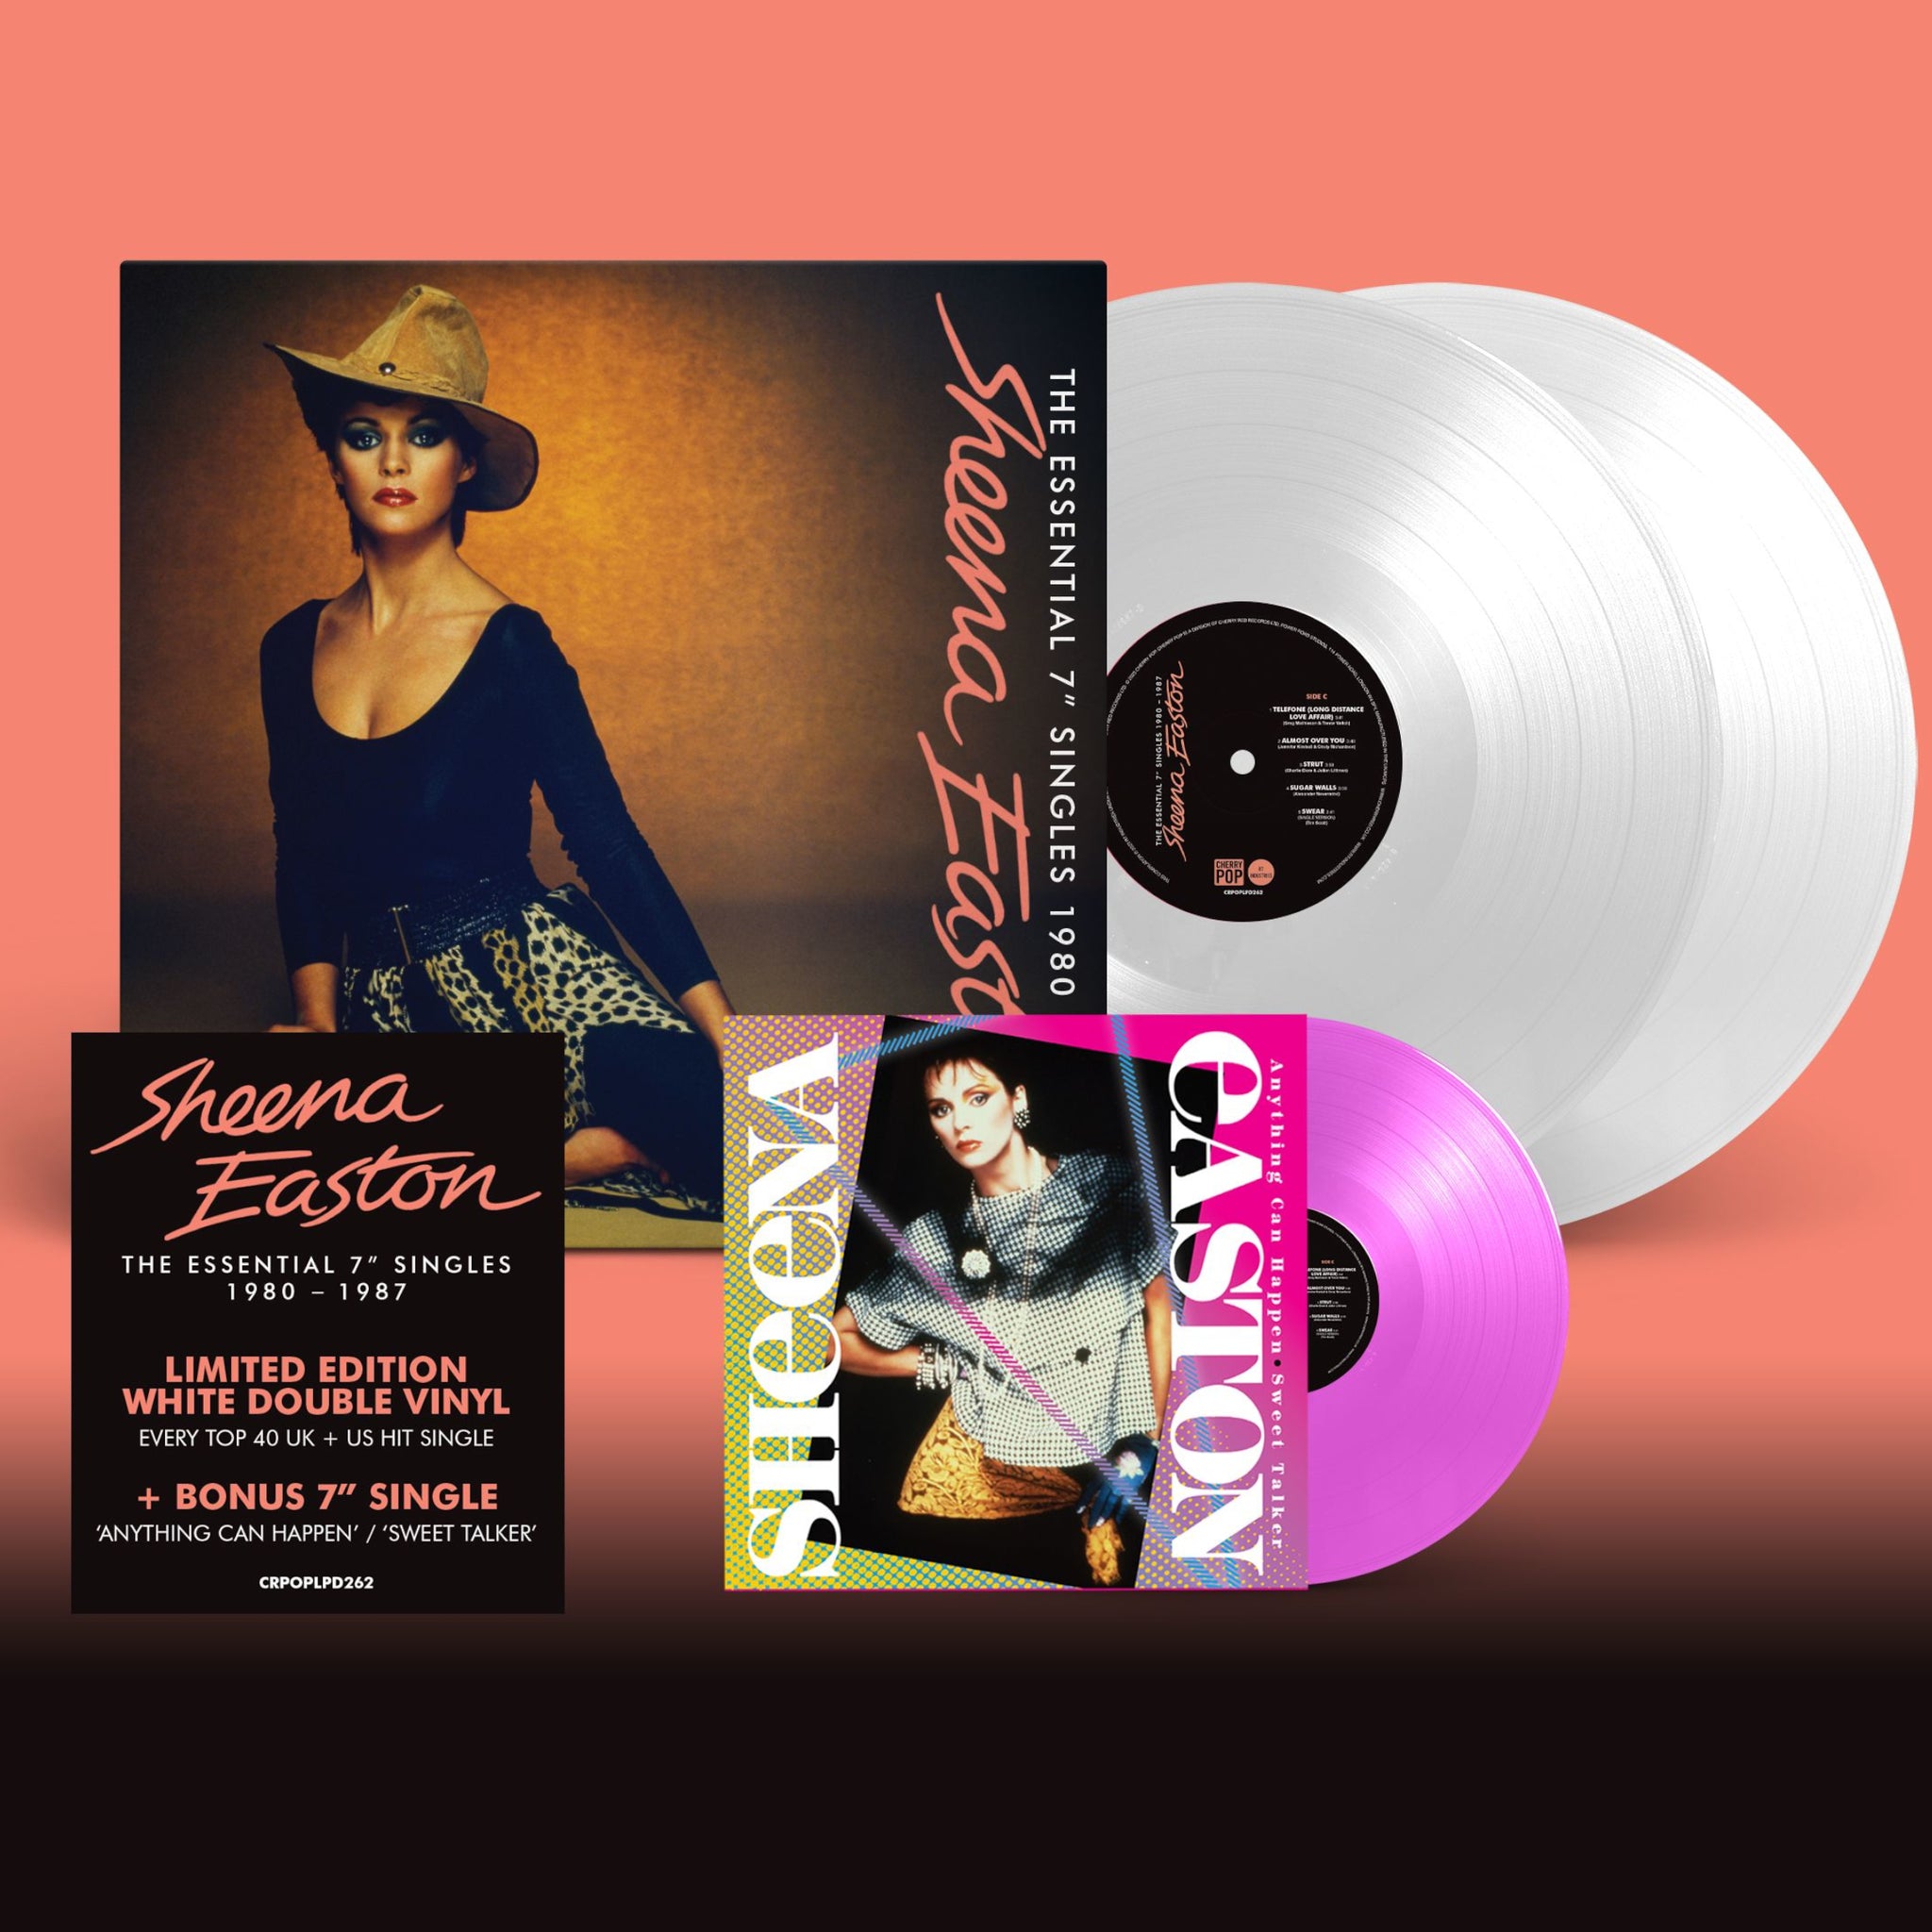 SHEENA EASTON - The Essential 7" Singles 1980-1987 - 2LP + 7" - White/Pink Glow Vinyl [RSD23]